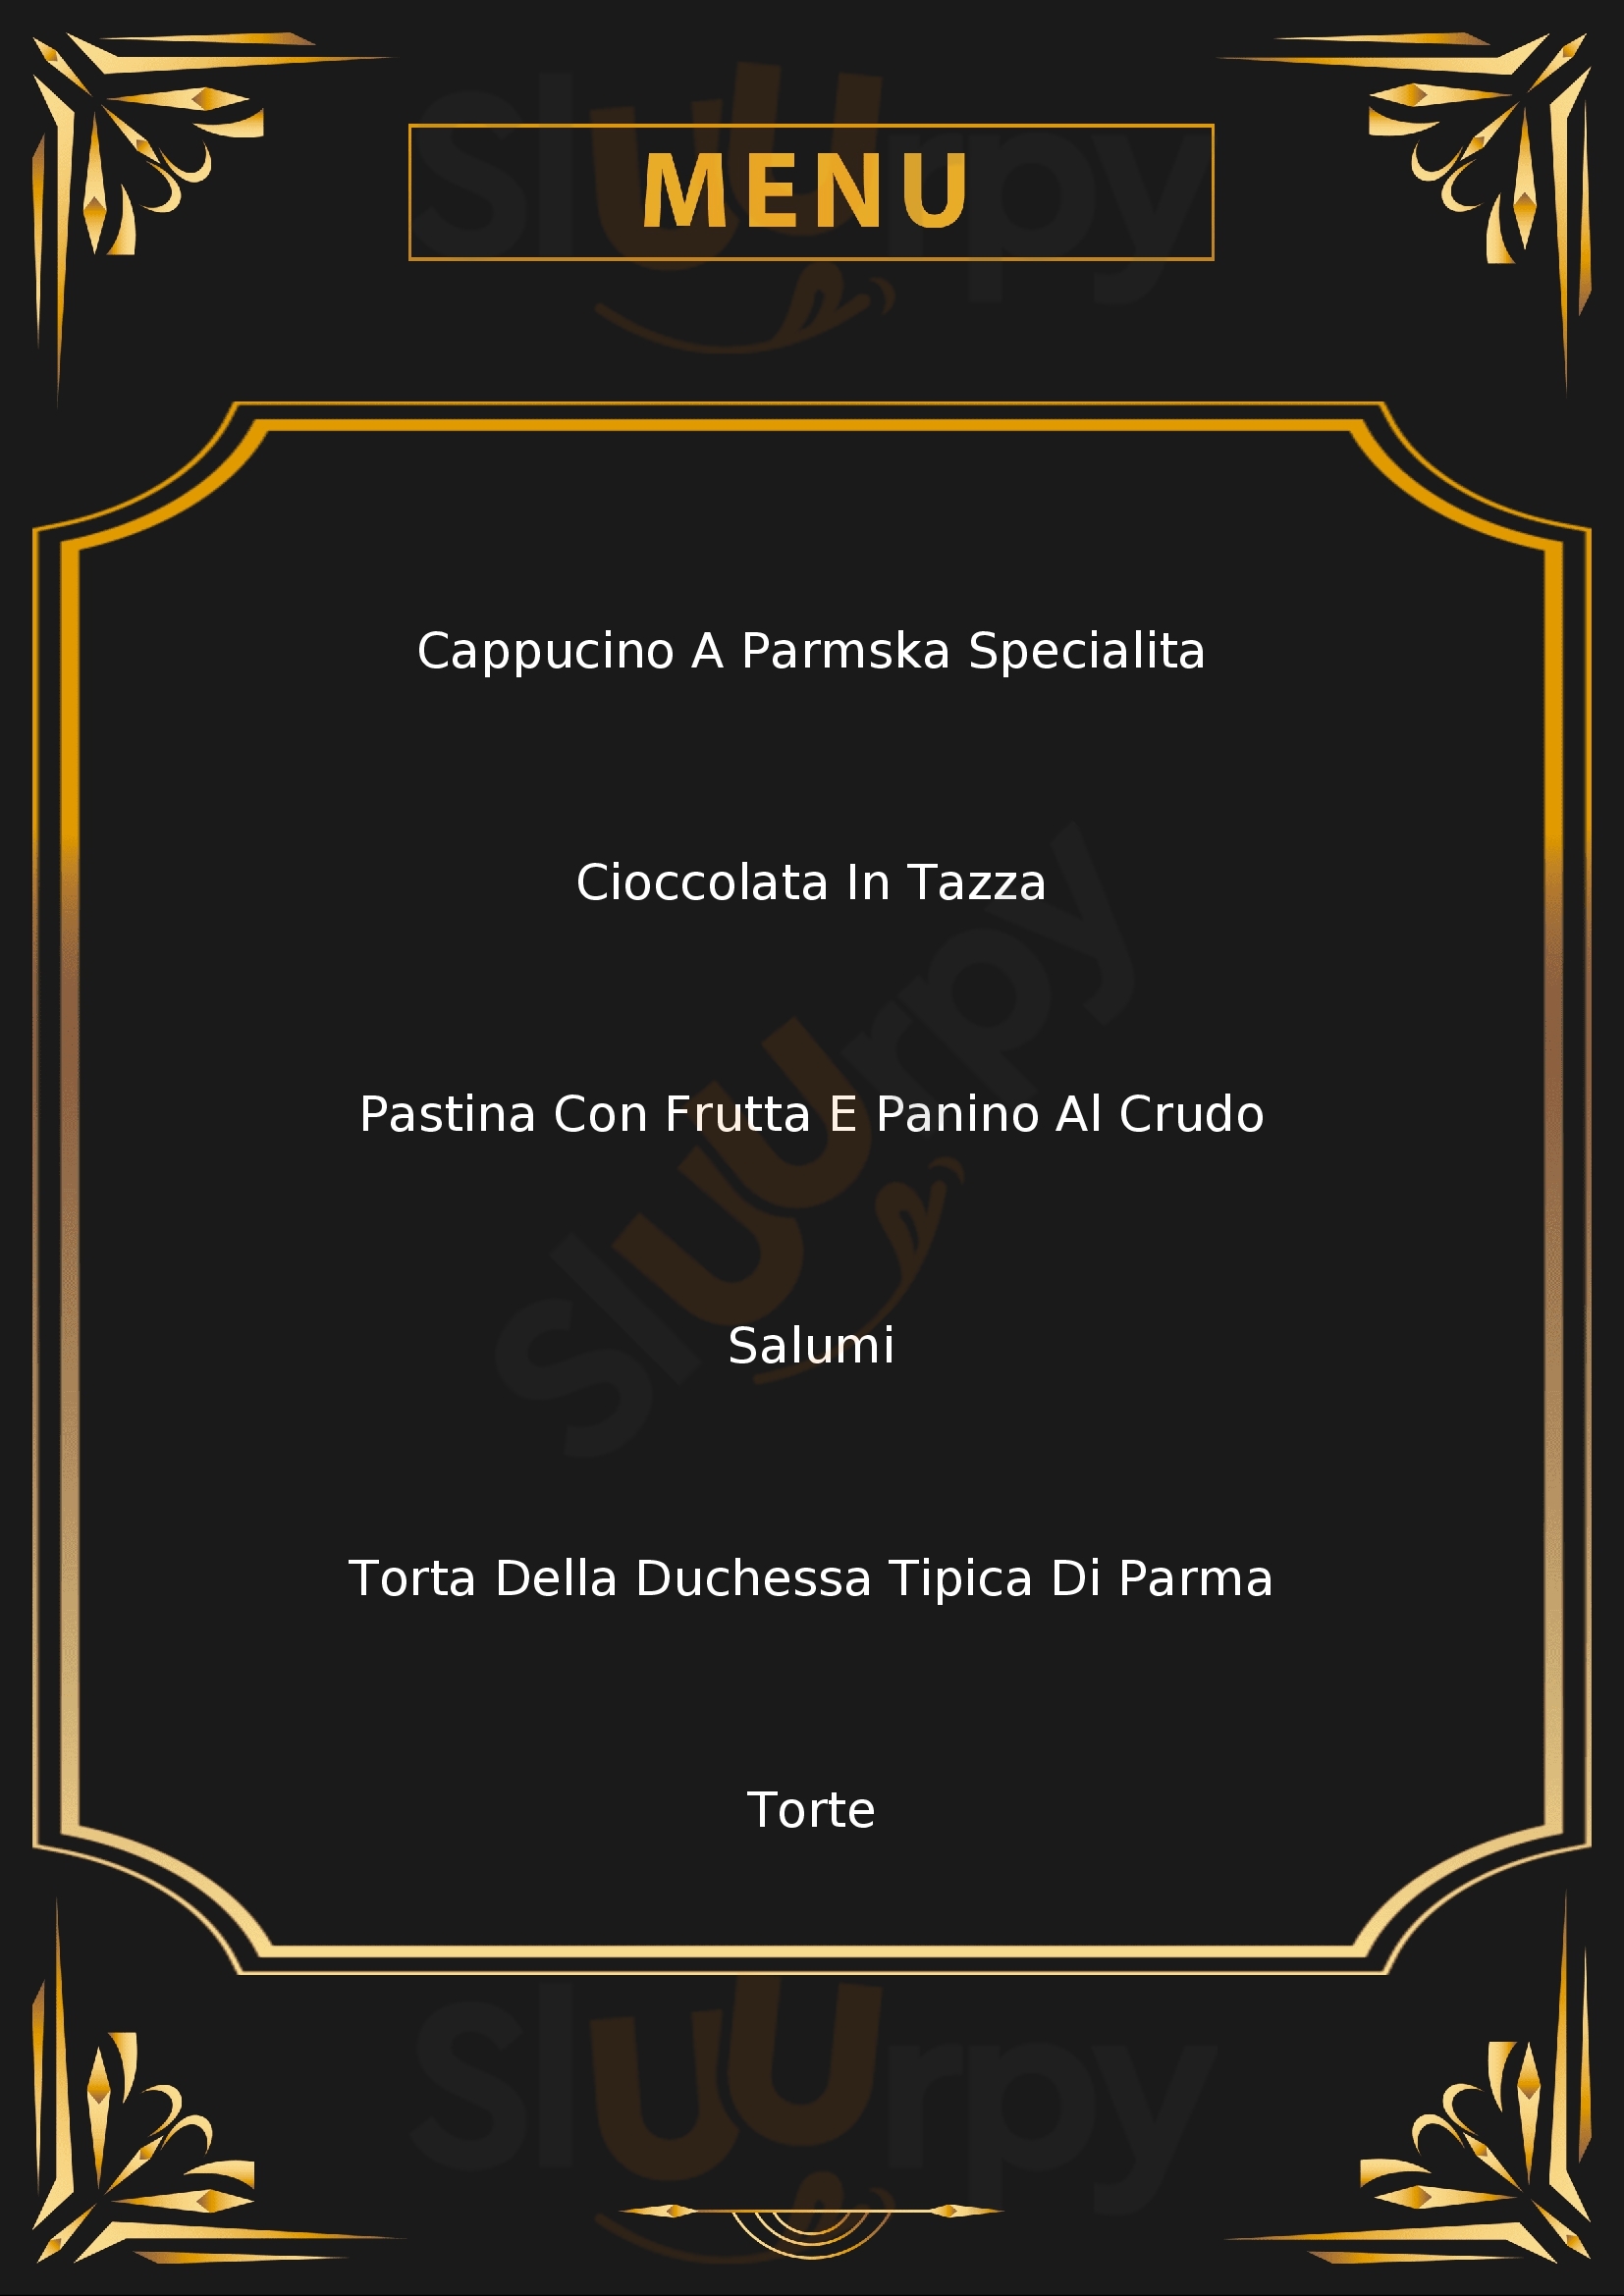 Pasticceria Cocconi Parma menù 1 pagina